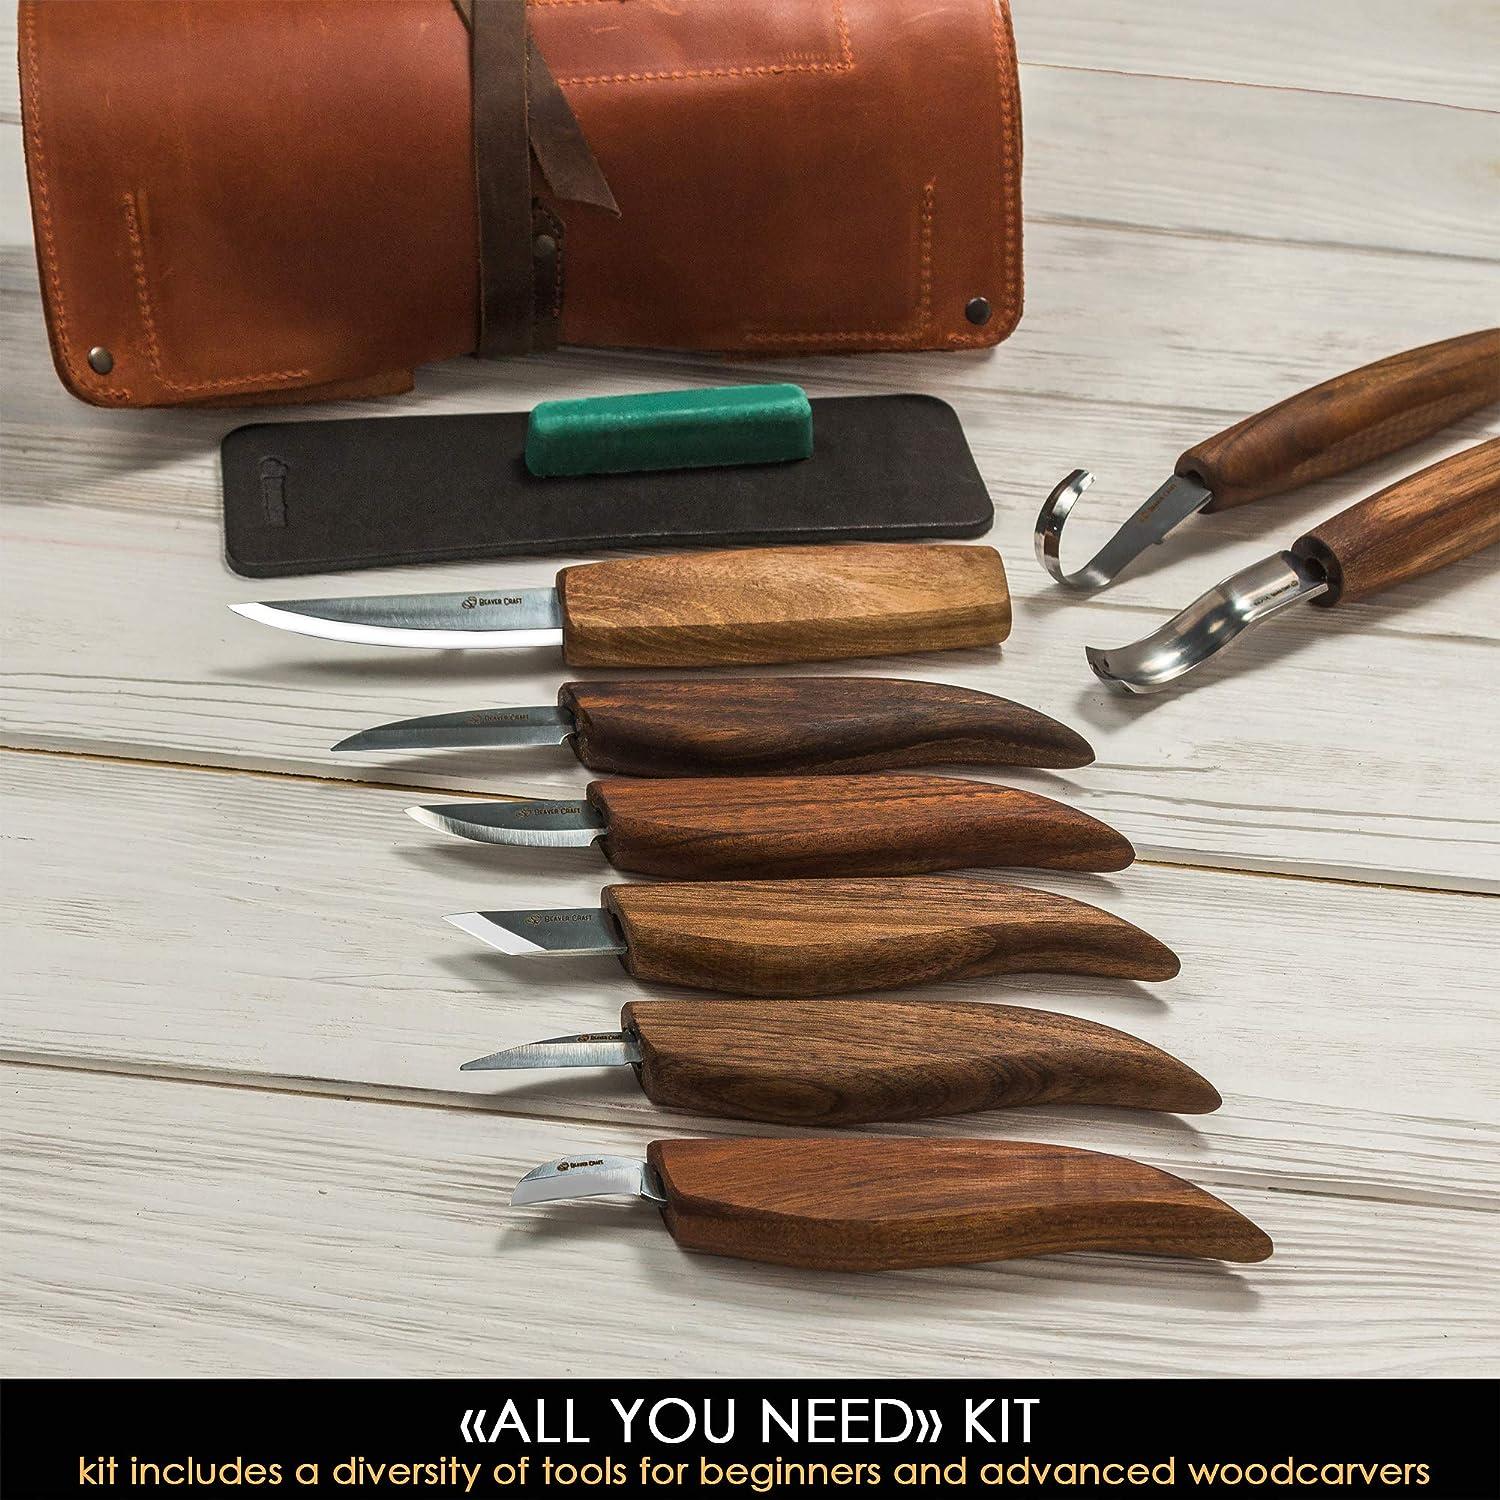 Advanced Wood Carving Kit n Knife